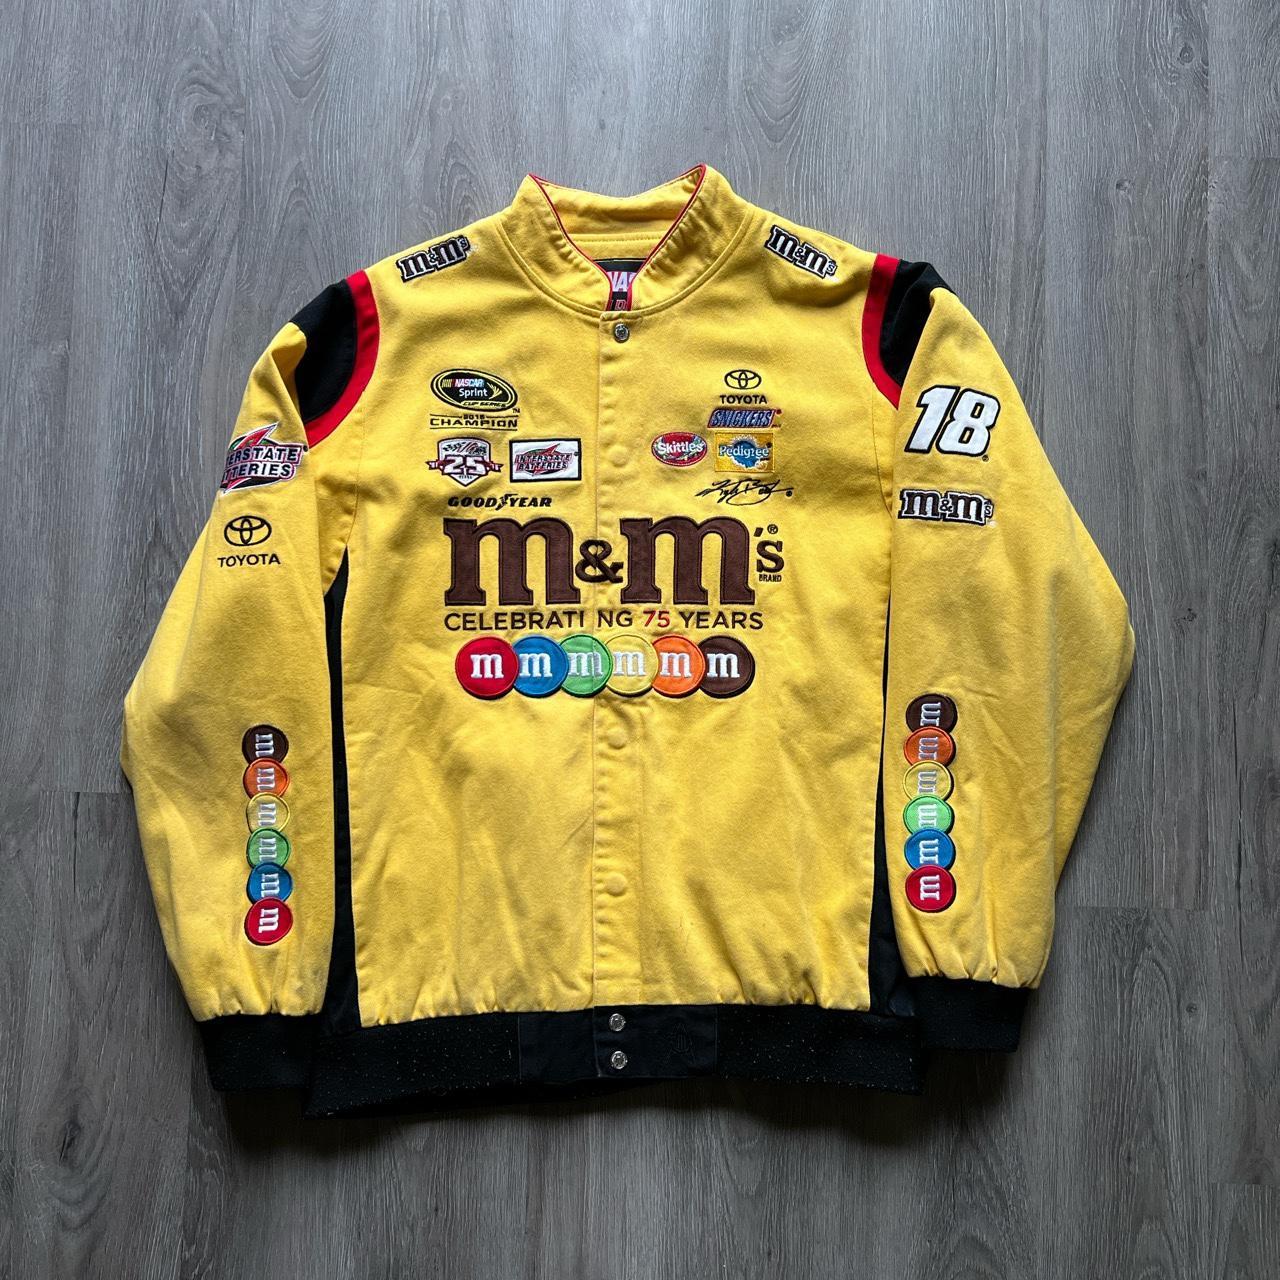 Vintage Jeff Hamilton Cheerios NASCAR jacket size... - Depop